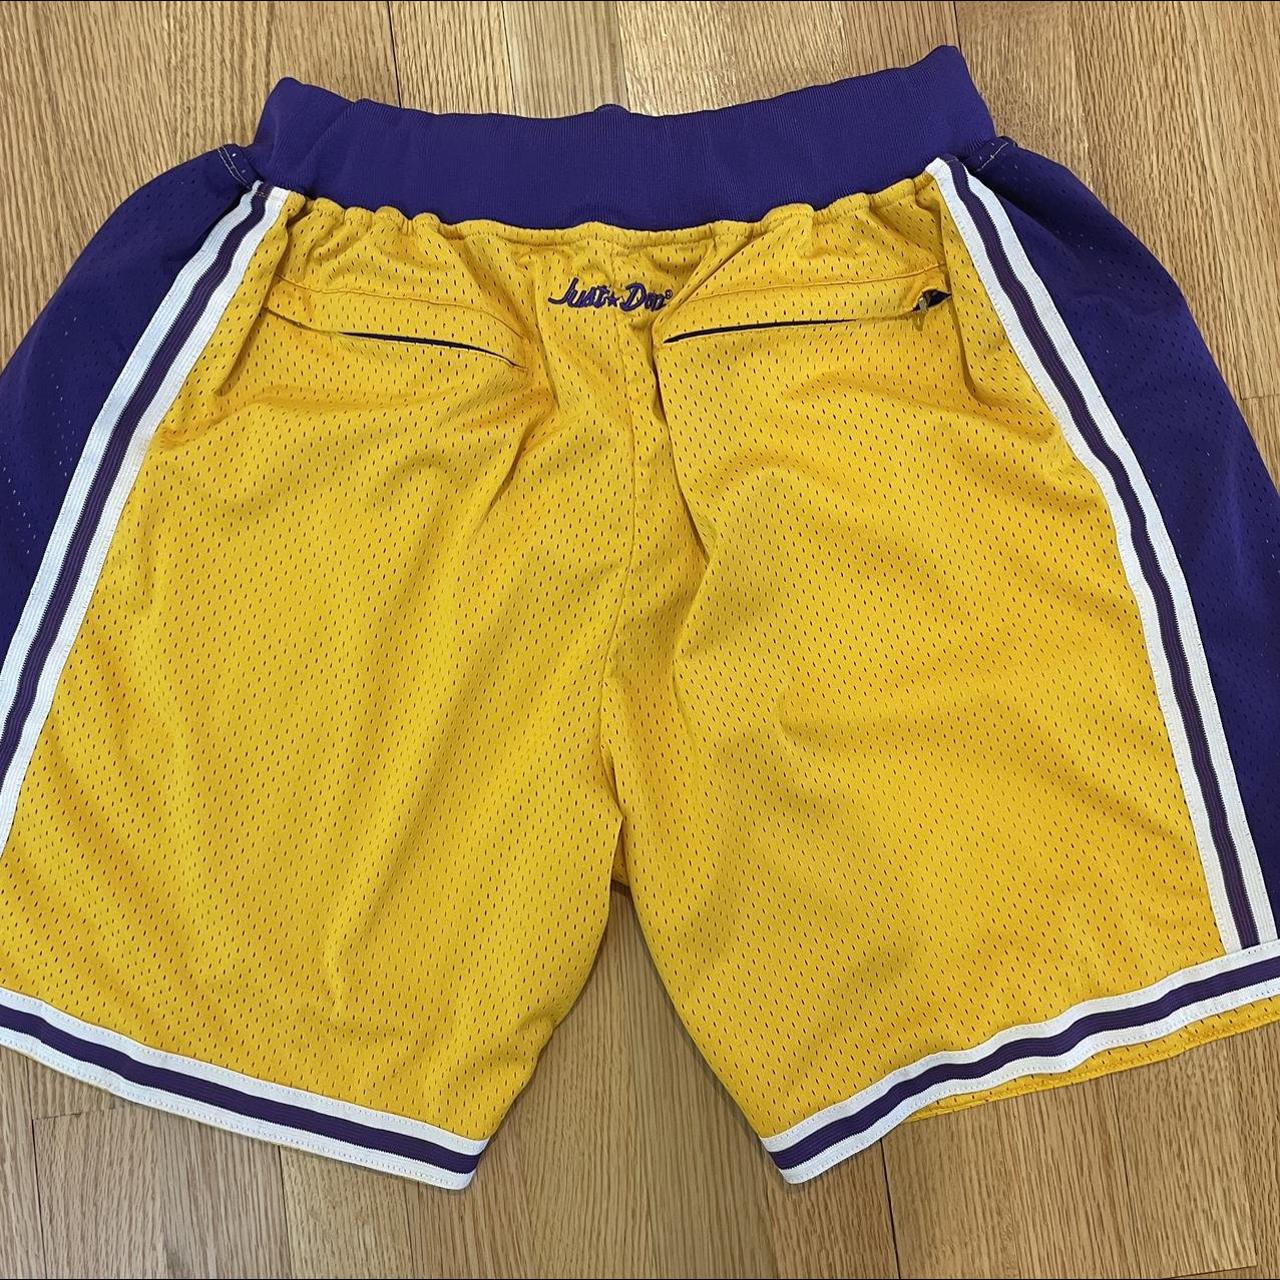 1996-1997 96-97 NBA Miami heat basketball shorts - Depop